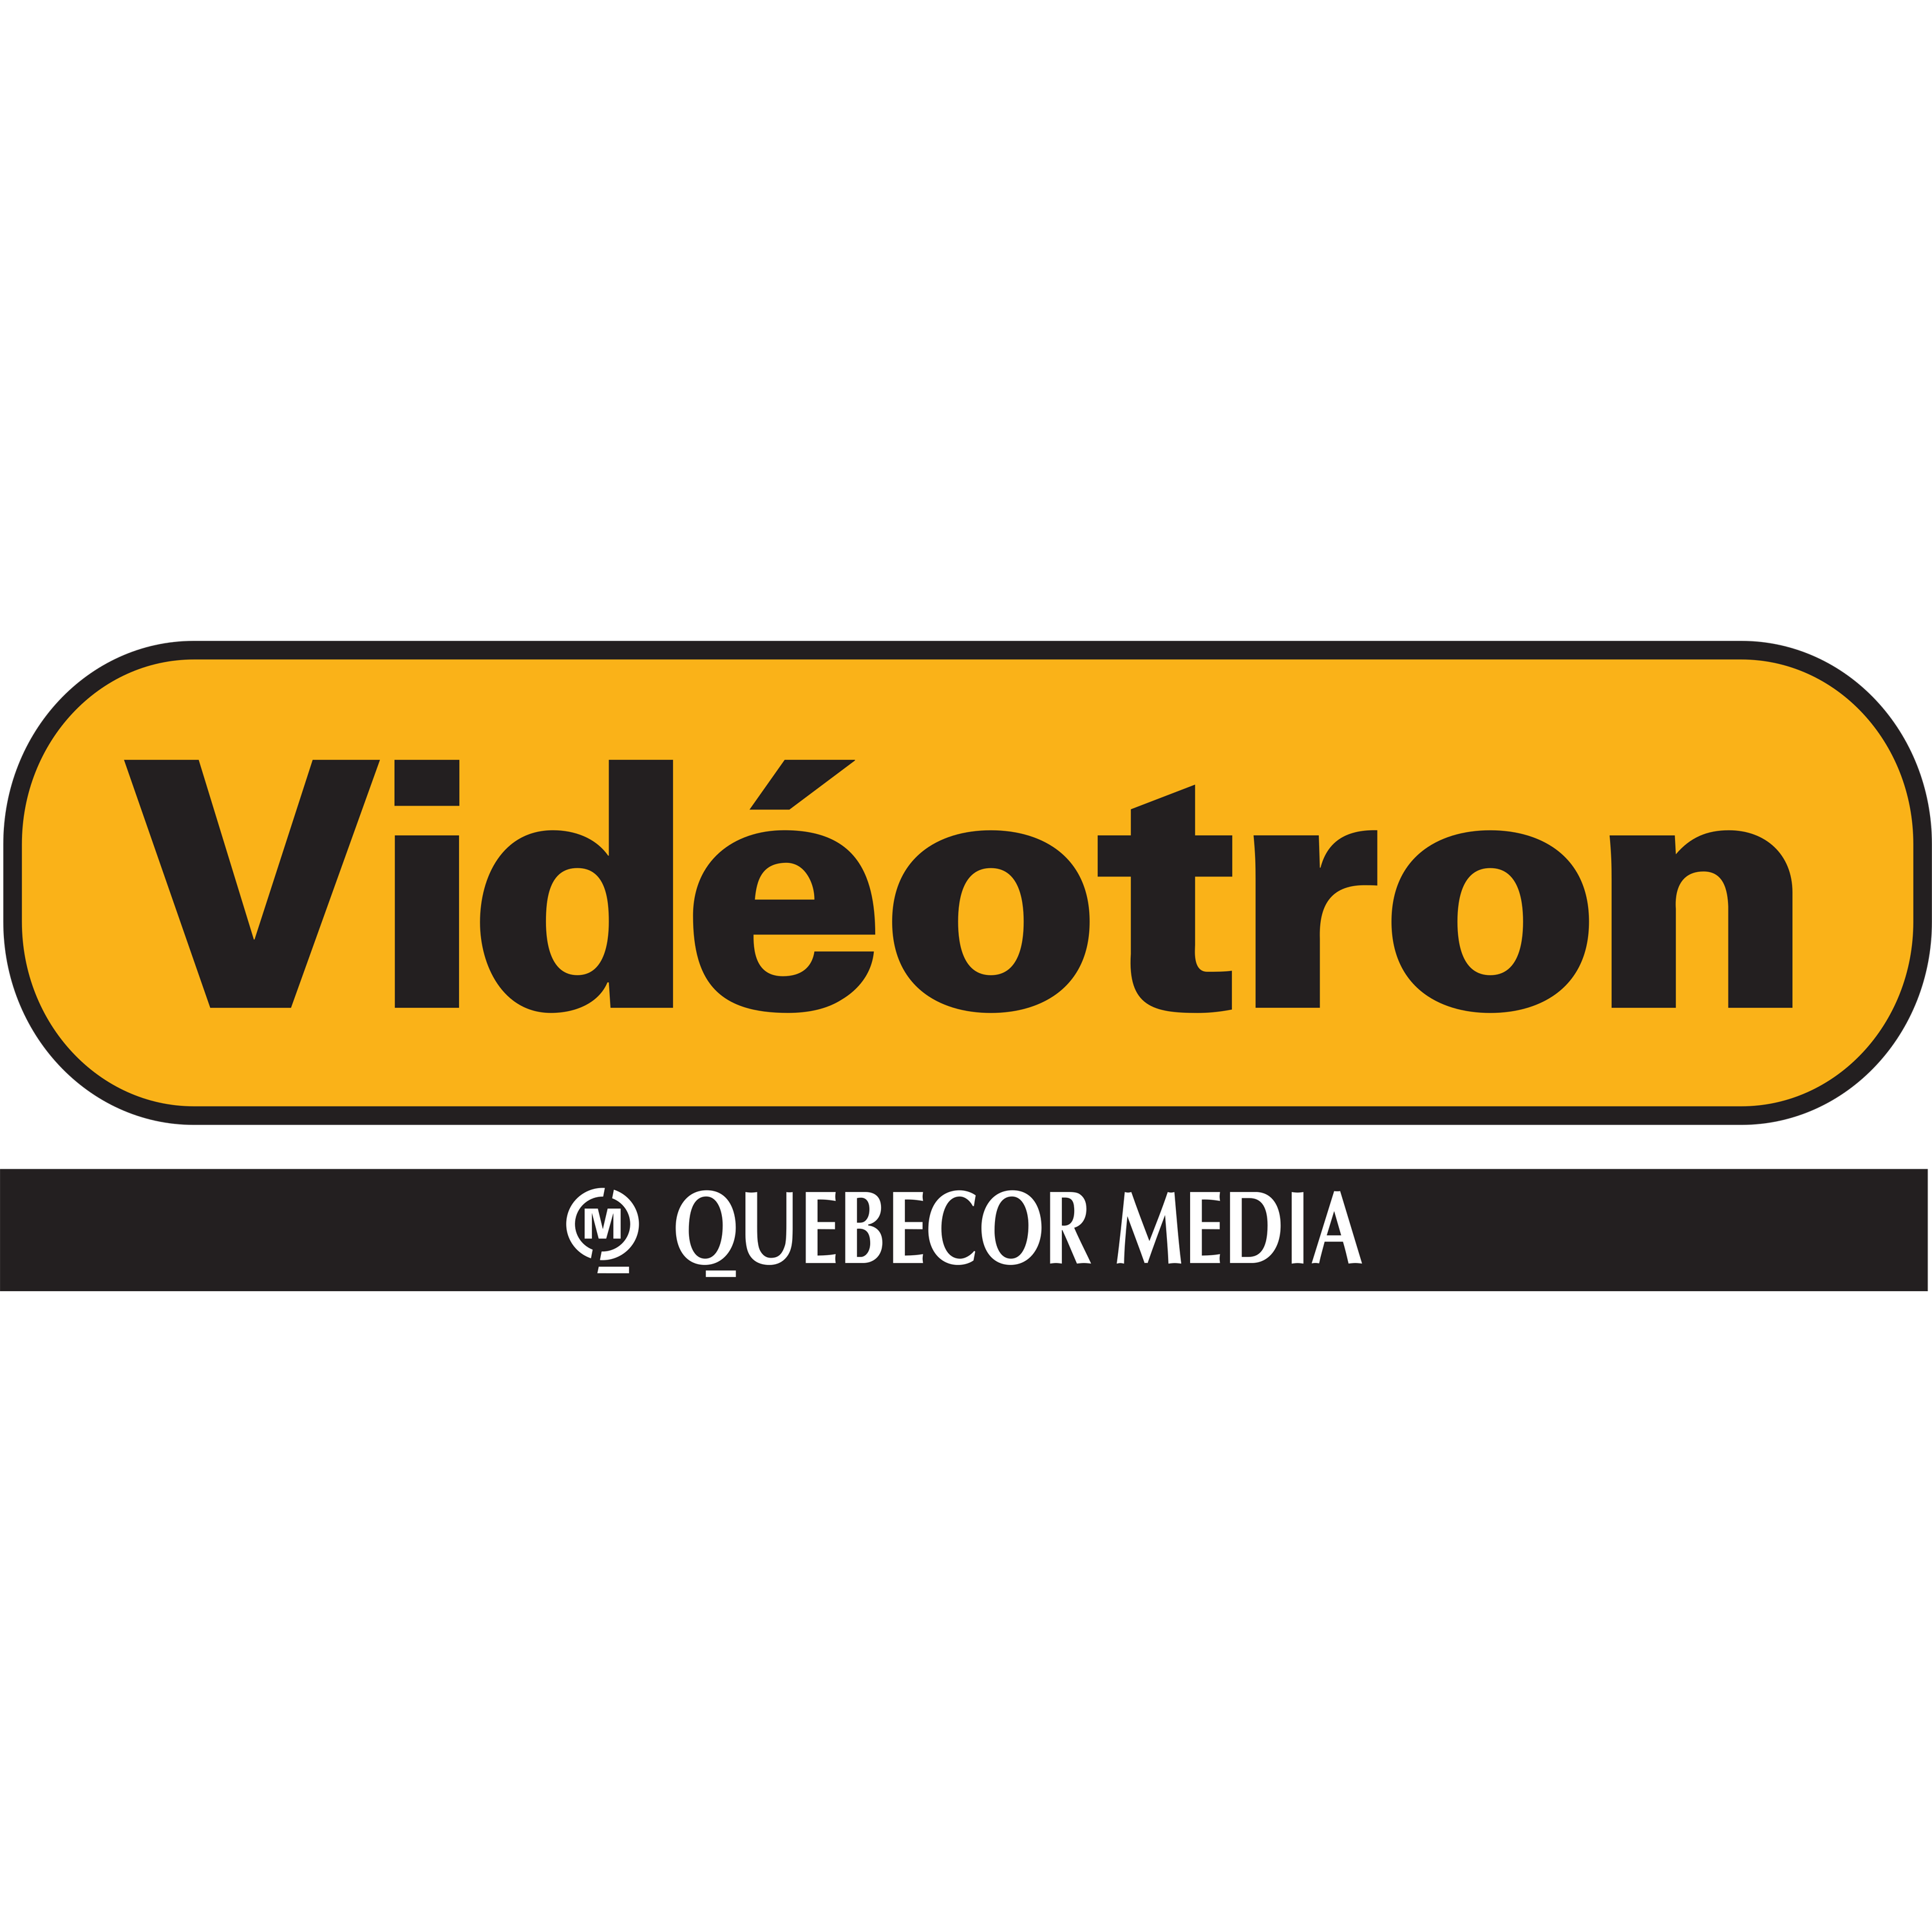 Videotron Logo 2002 Transparent Image